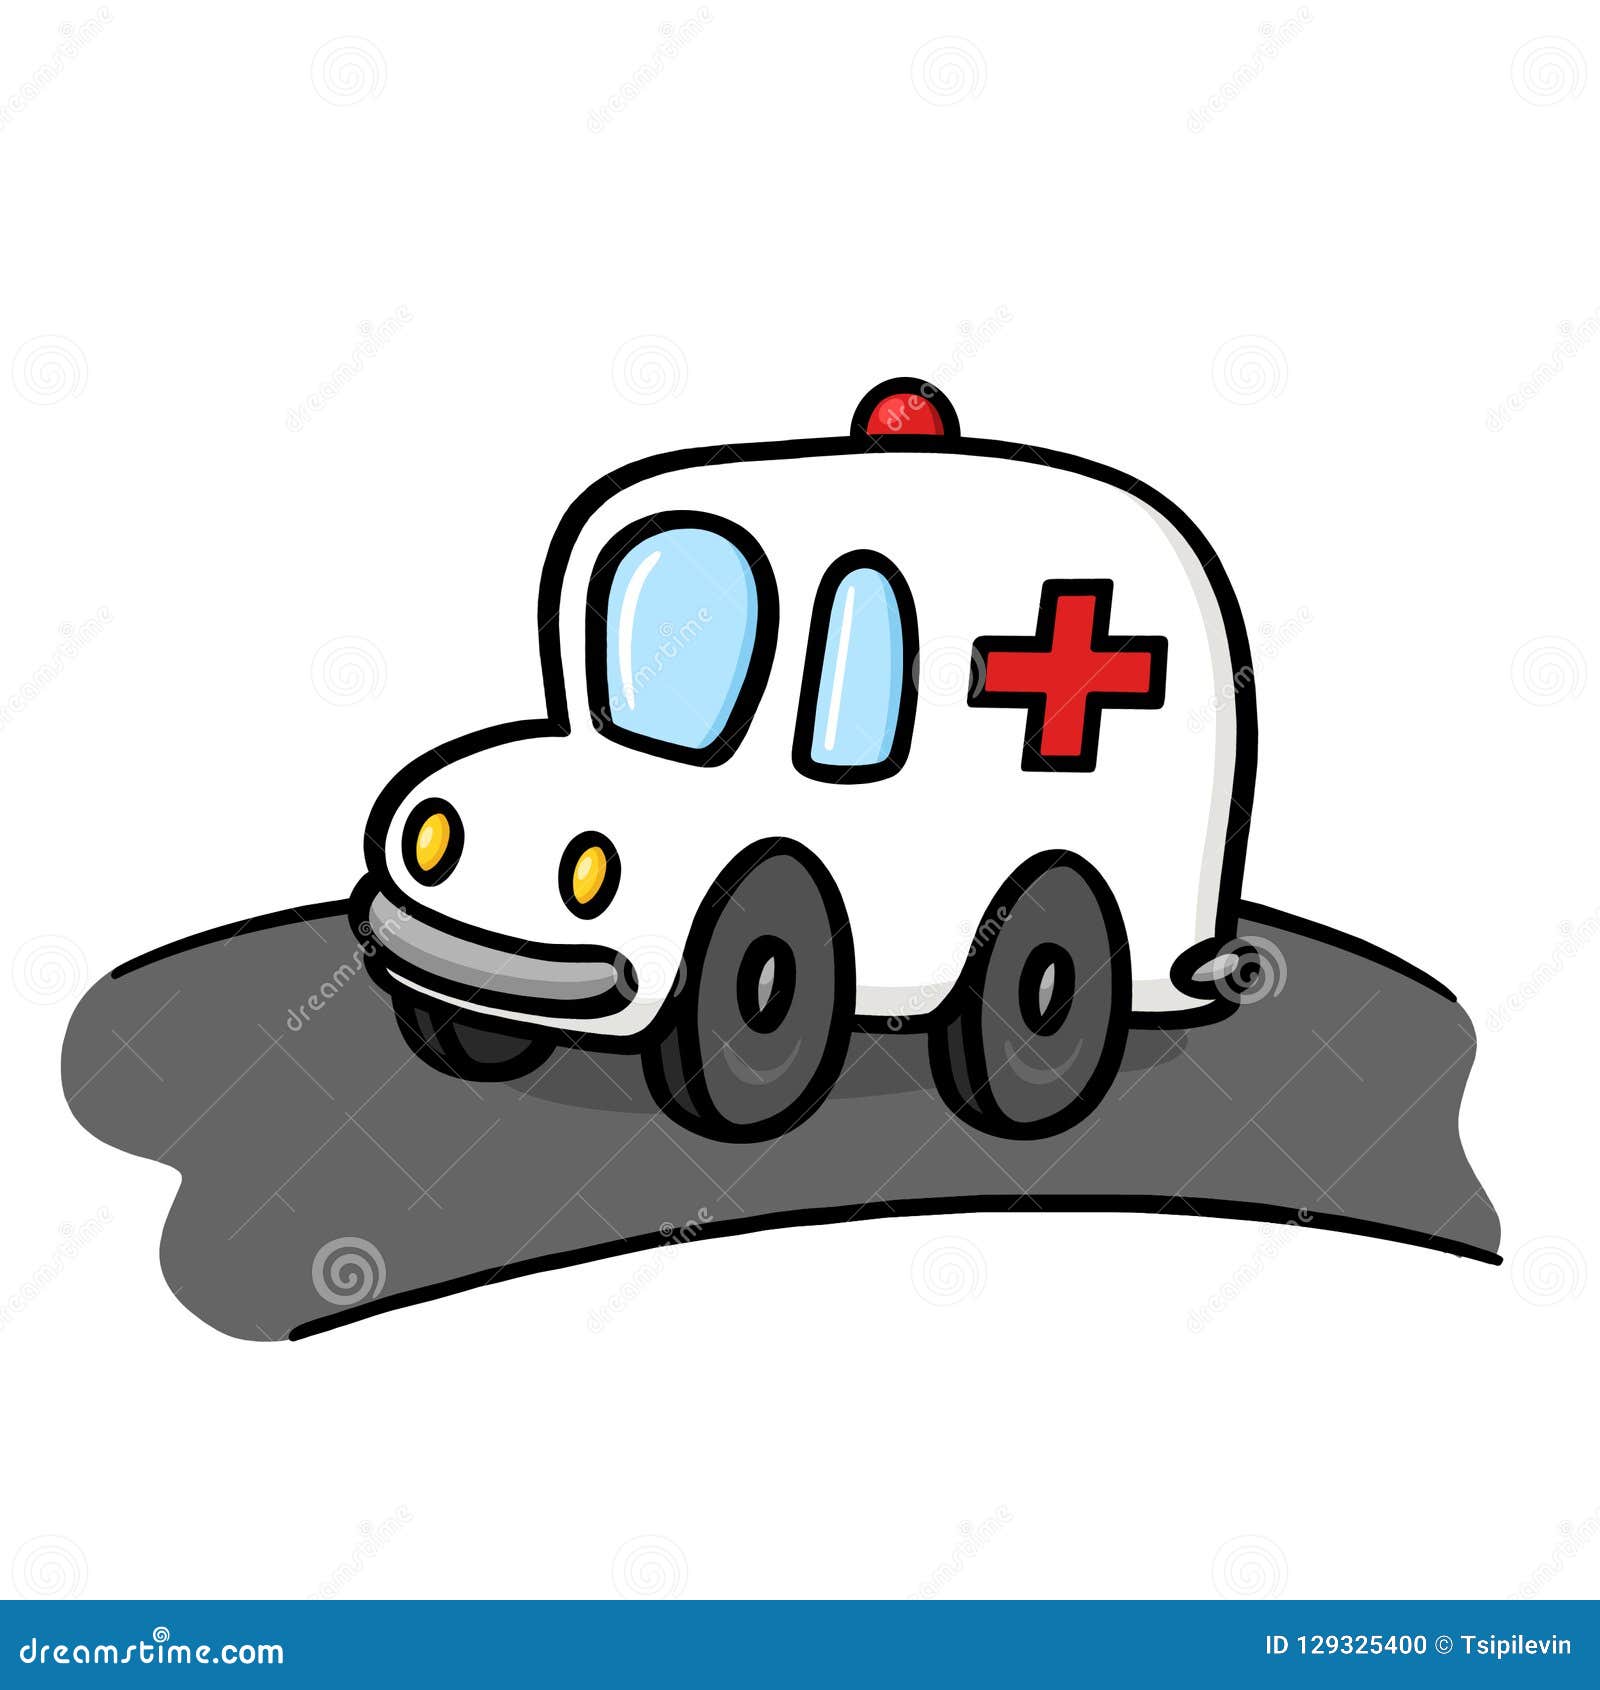 Ambulance on the Road Cartoon Stock Illustration - Illustration of care,  vehicle: 129325400